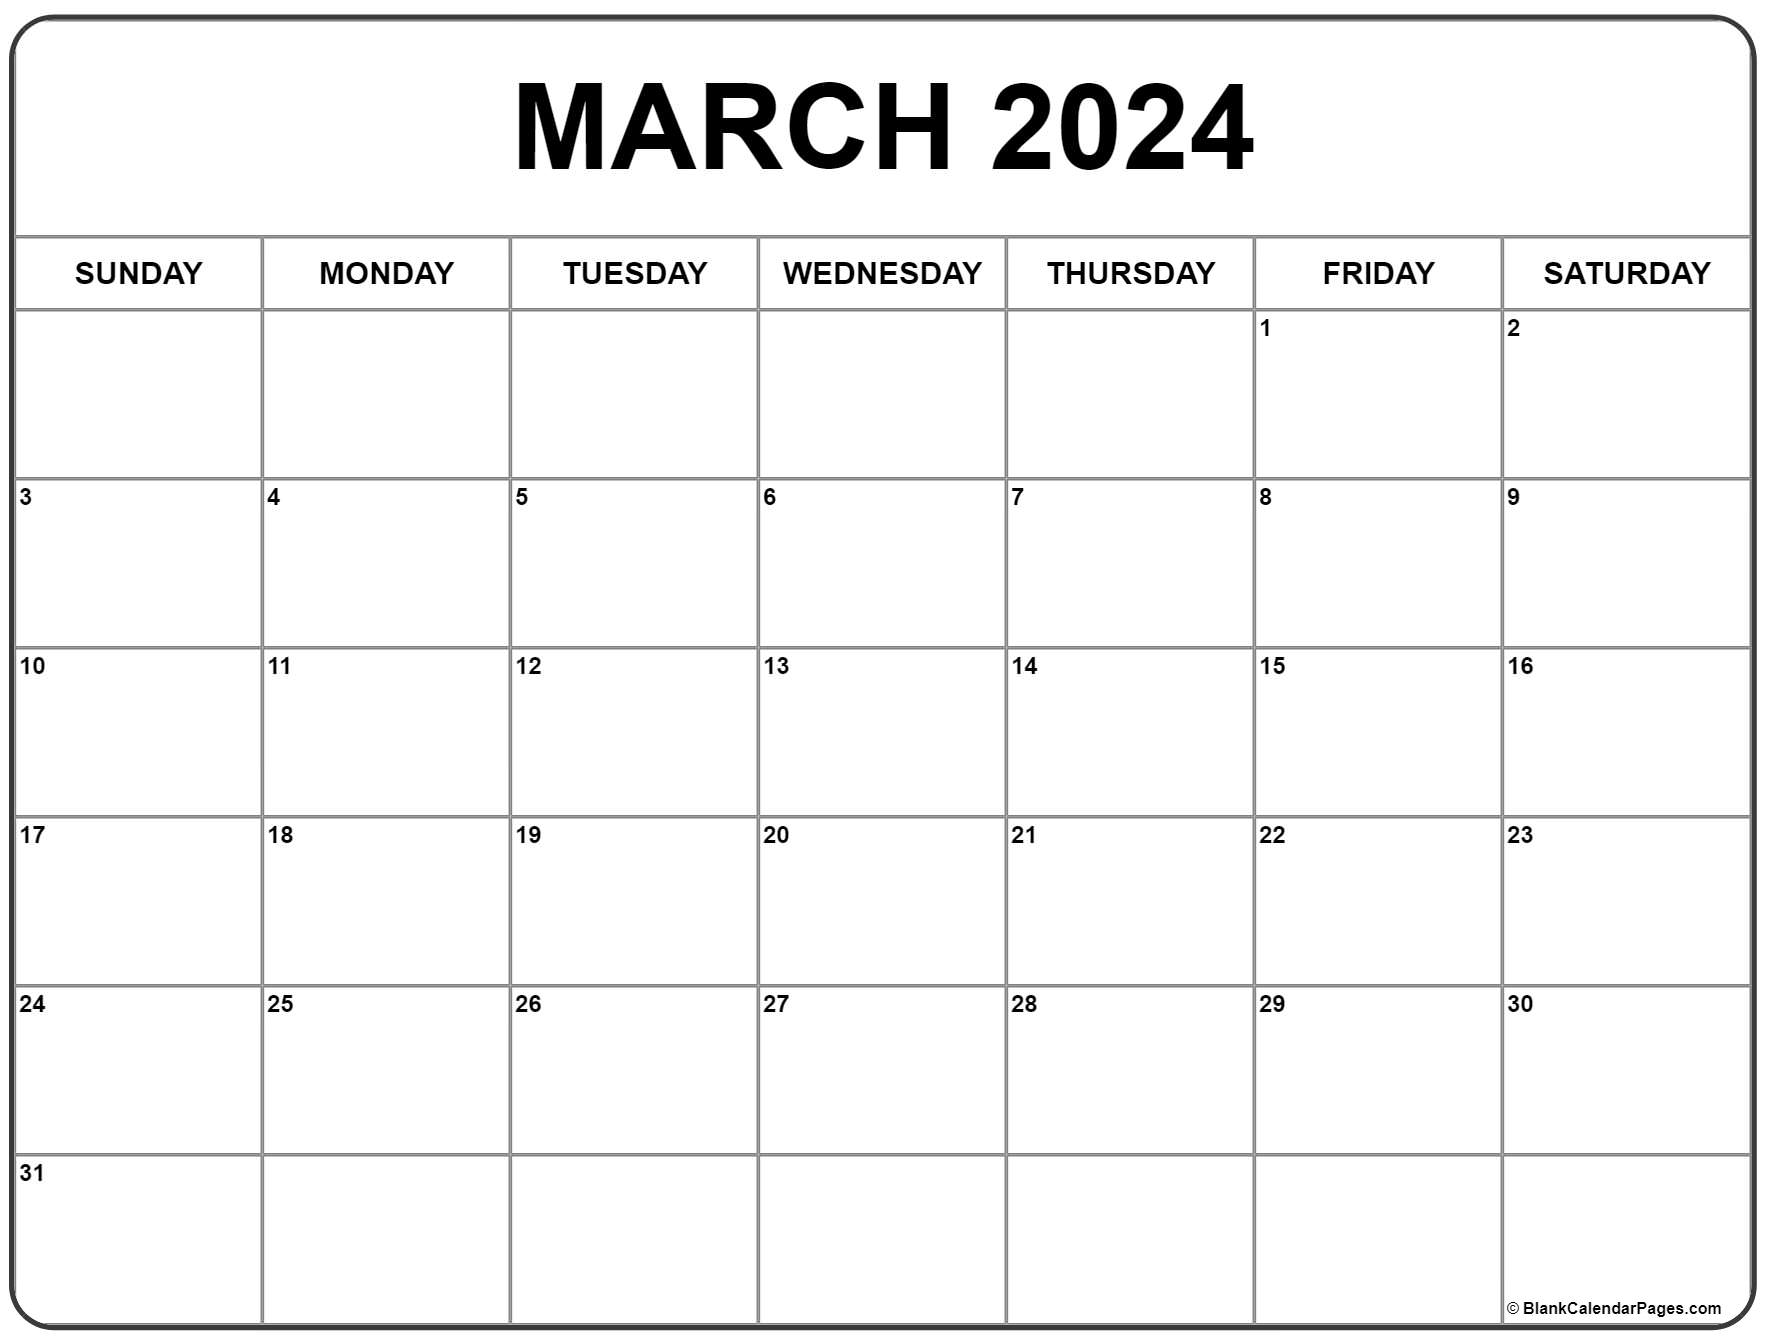 March 2024 Calendar | Free Printable Calendar for Printable Month Calendar March 2024